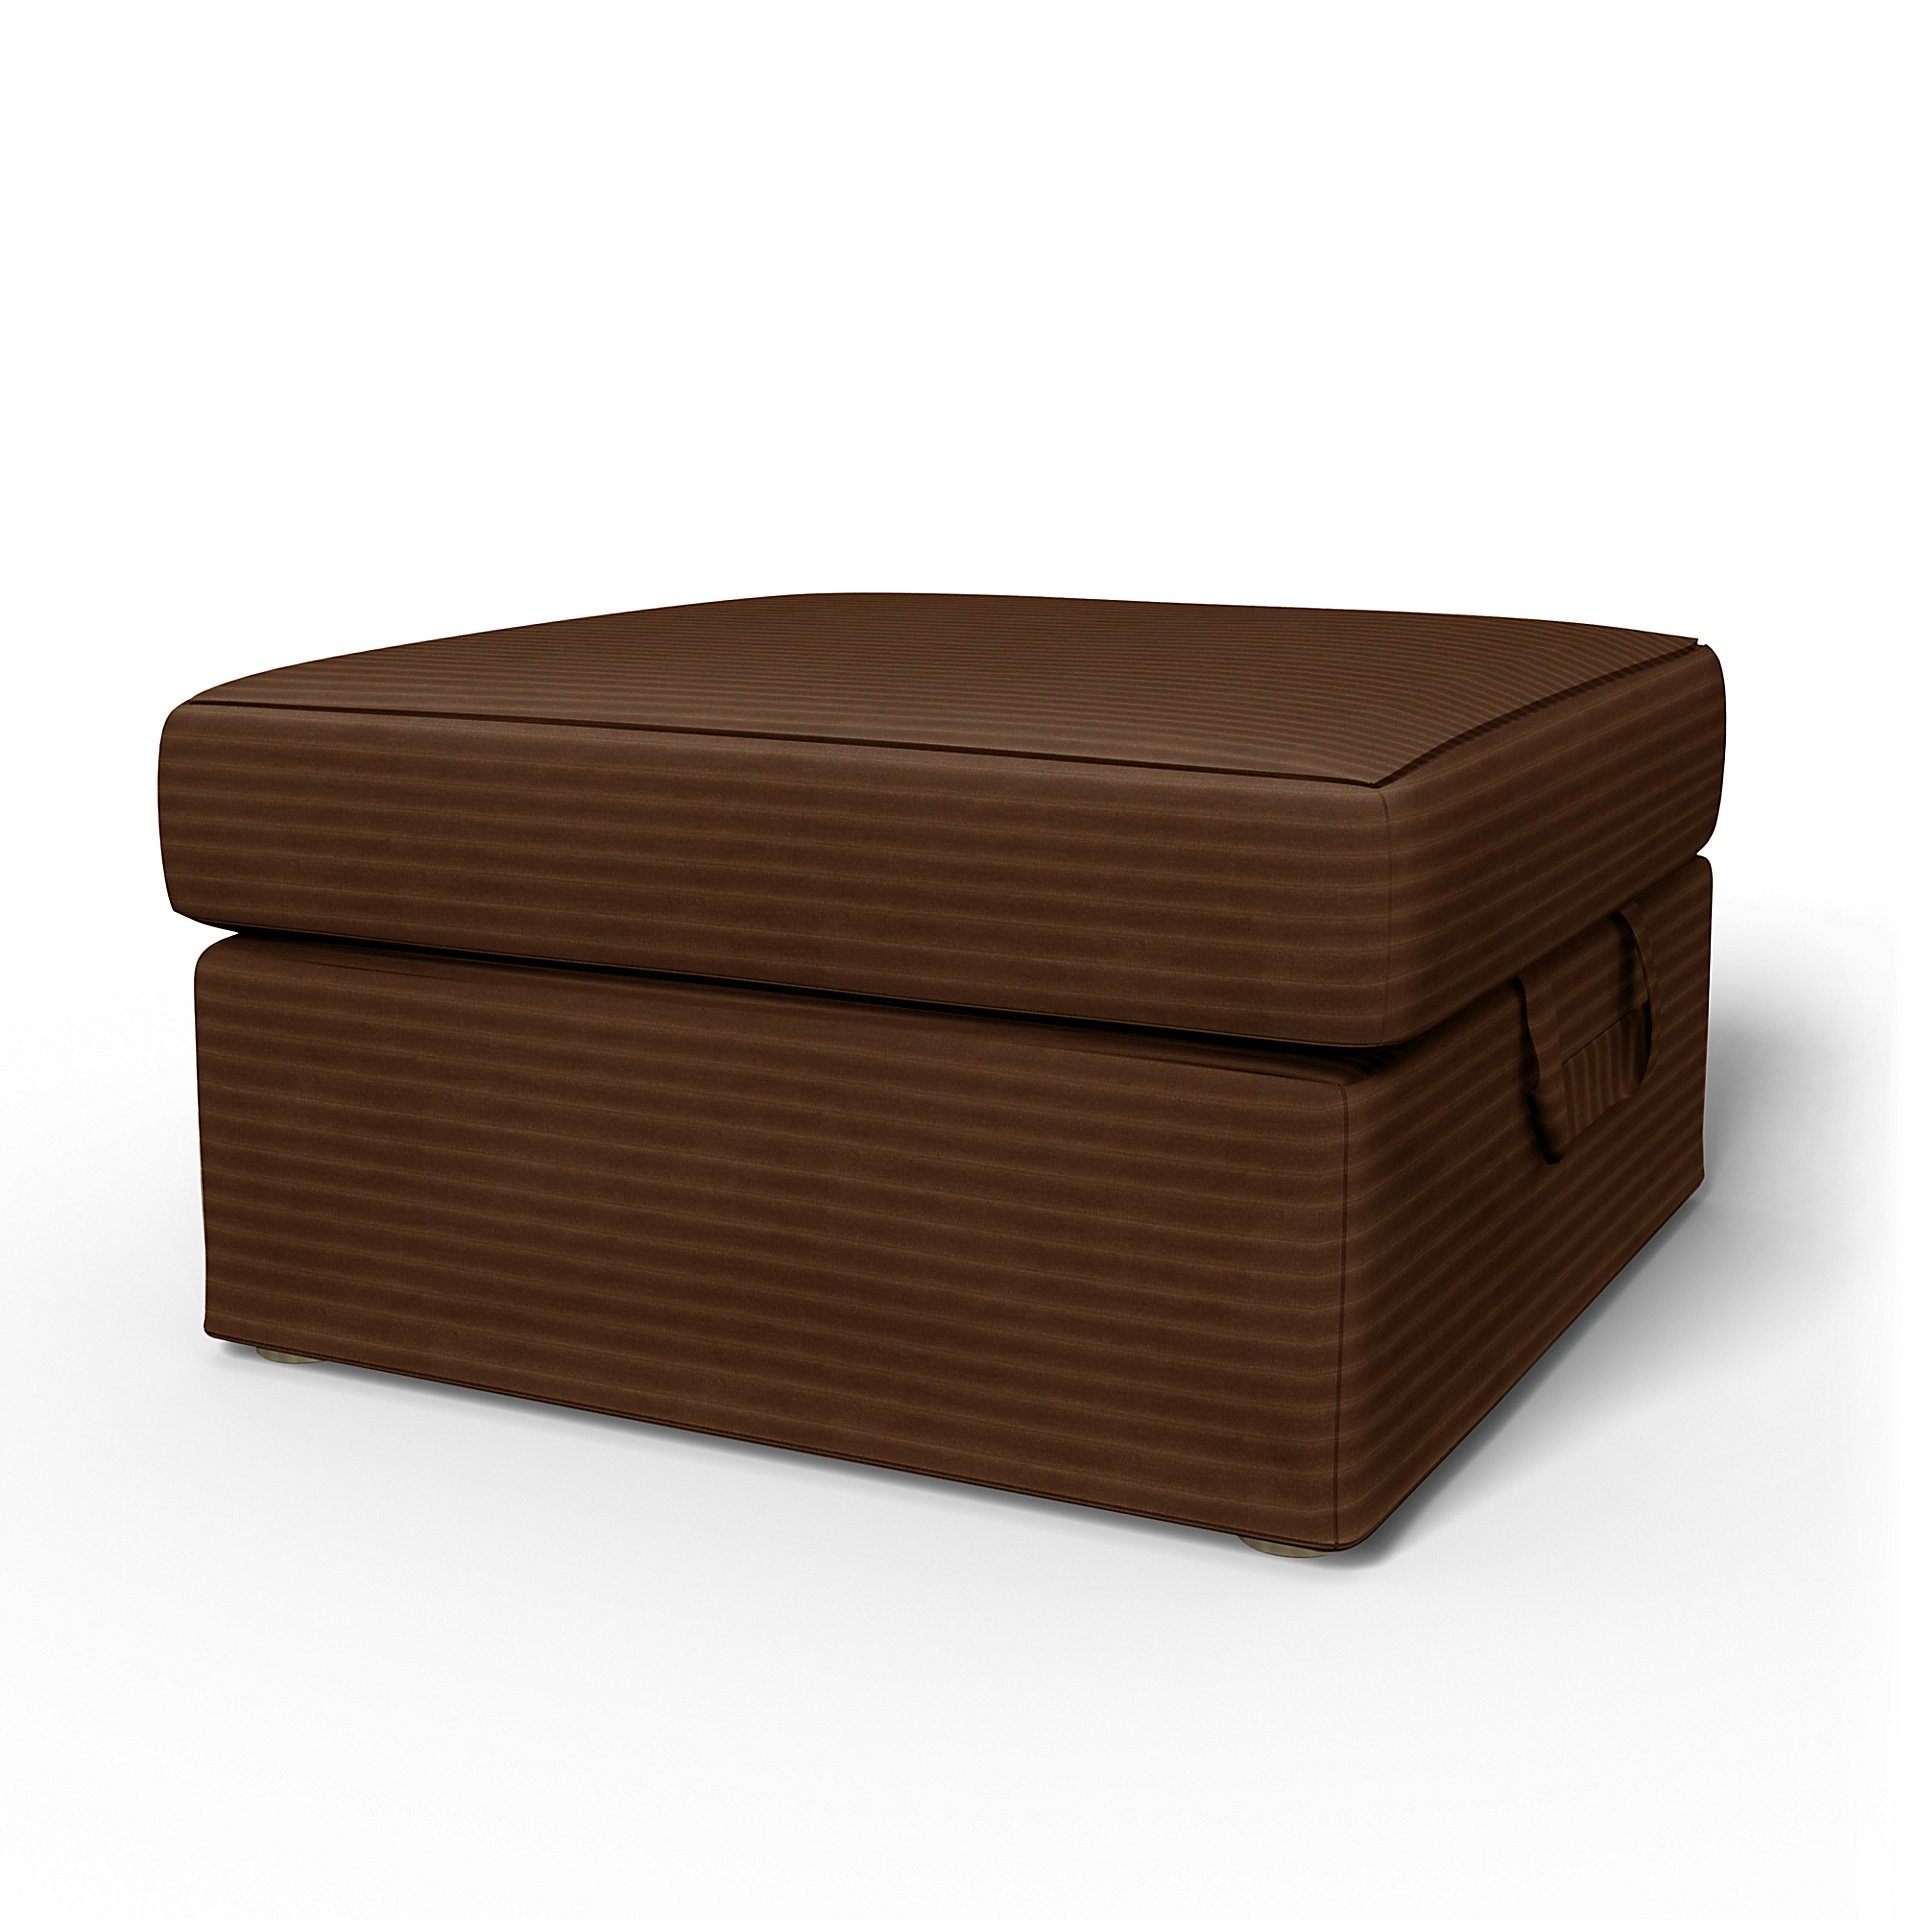 IKEA - Tomelilla Foto Footstool Cover, Chocolate Brown, Corduroy - Bemz